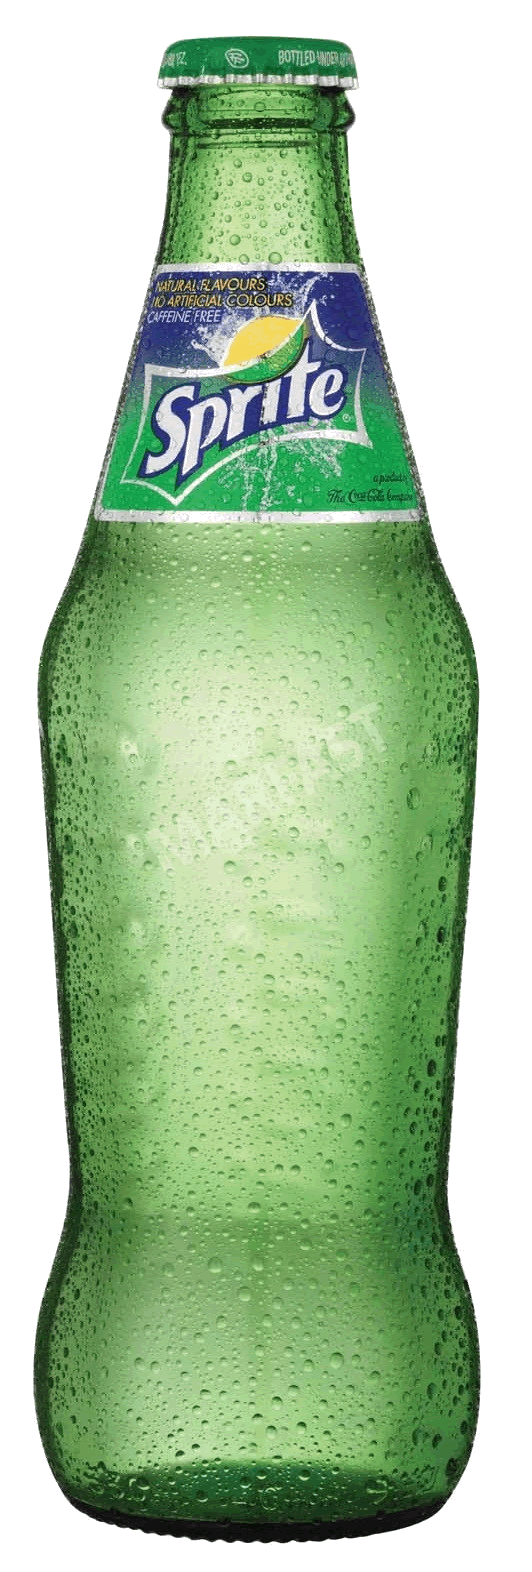 Groen glazen waterfles PNG-bestand